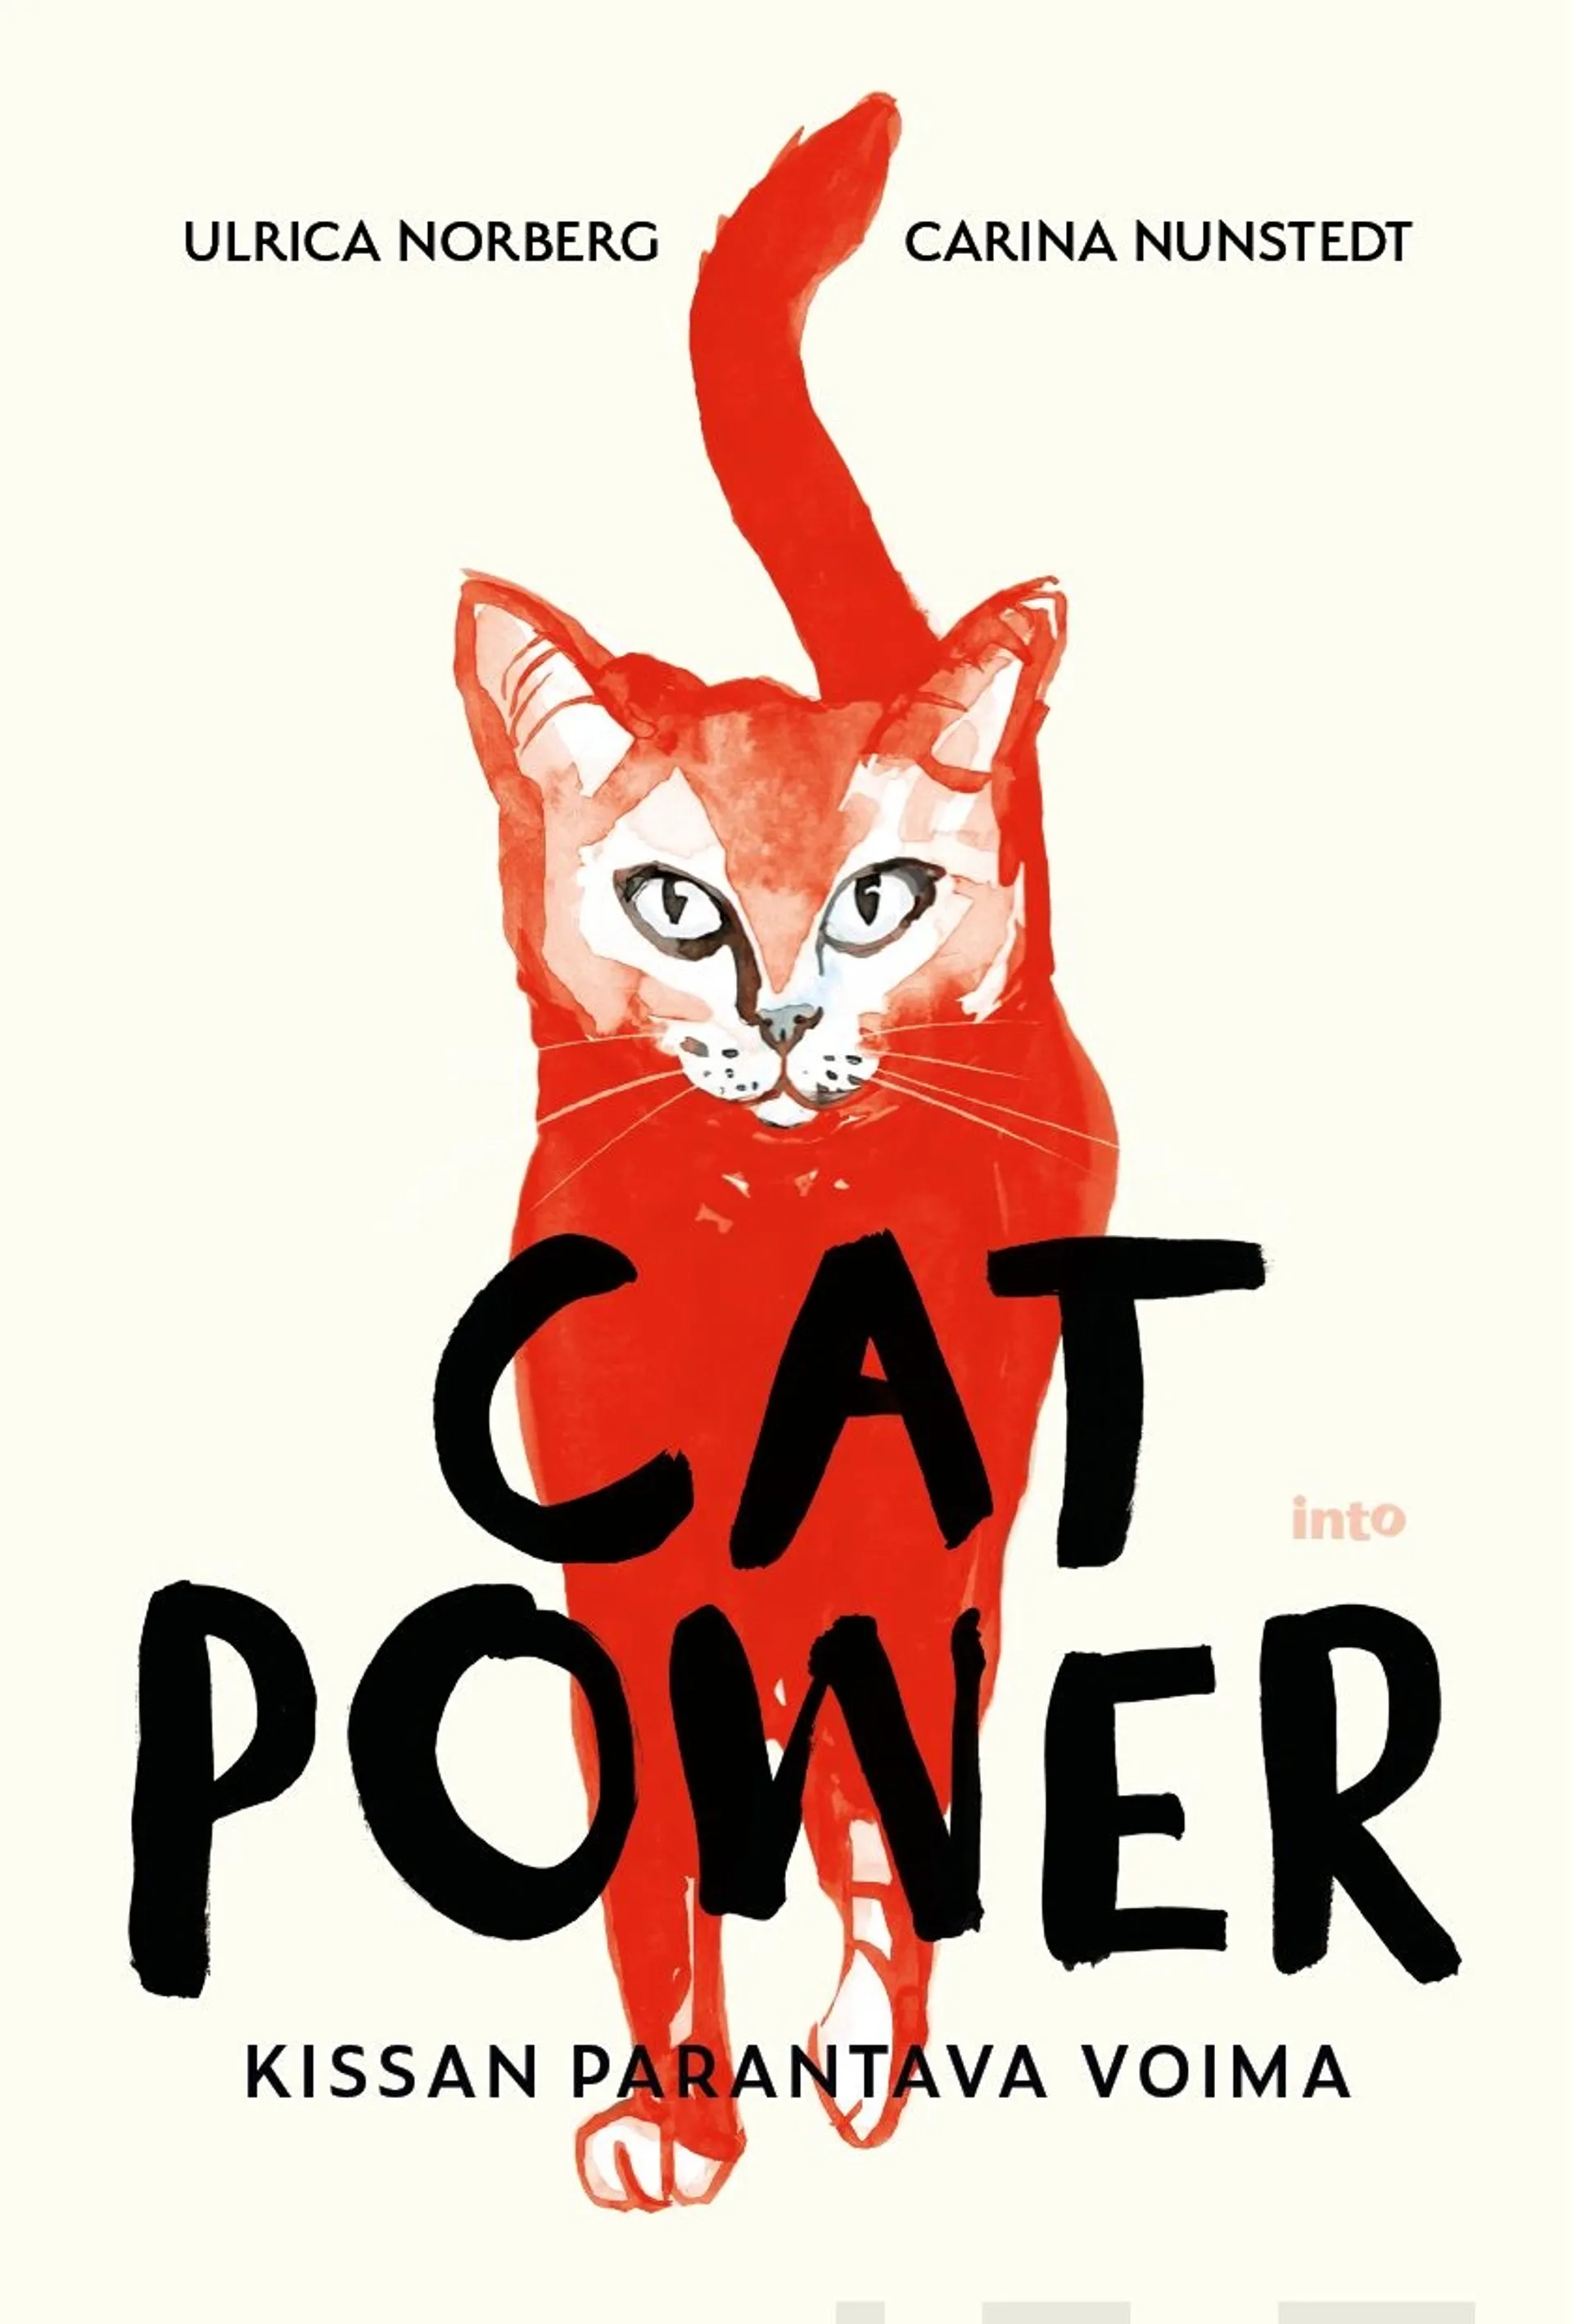 Norberg, Cat power - Kissan parantava voima